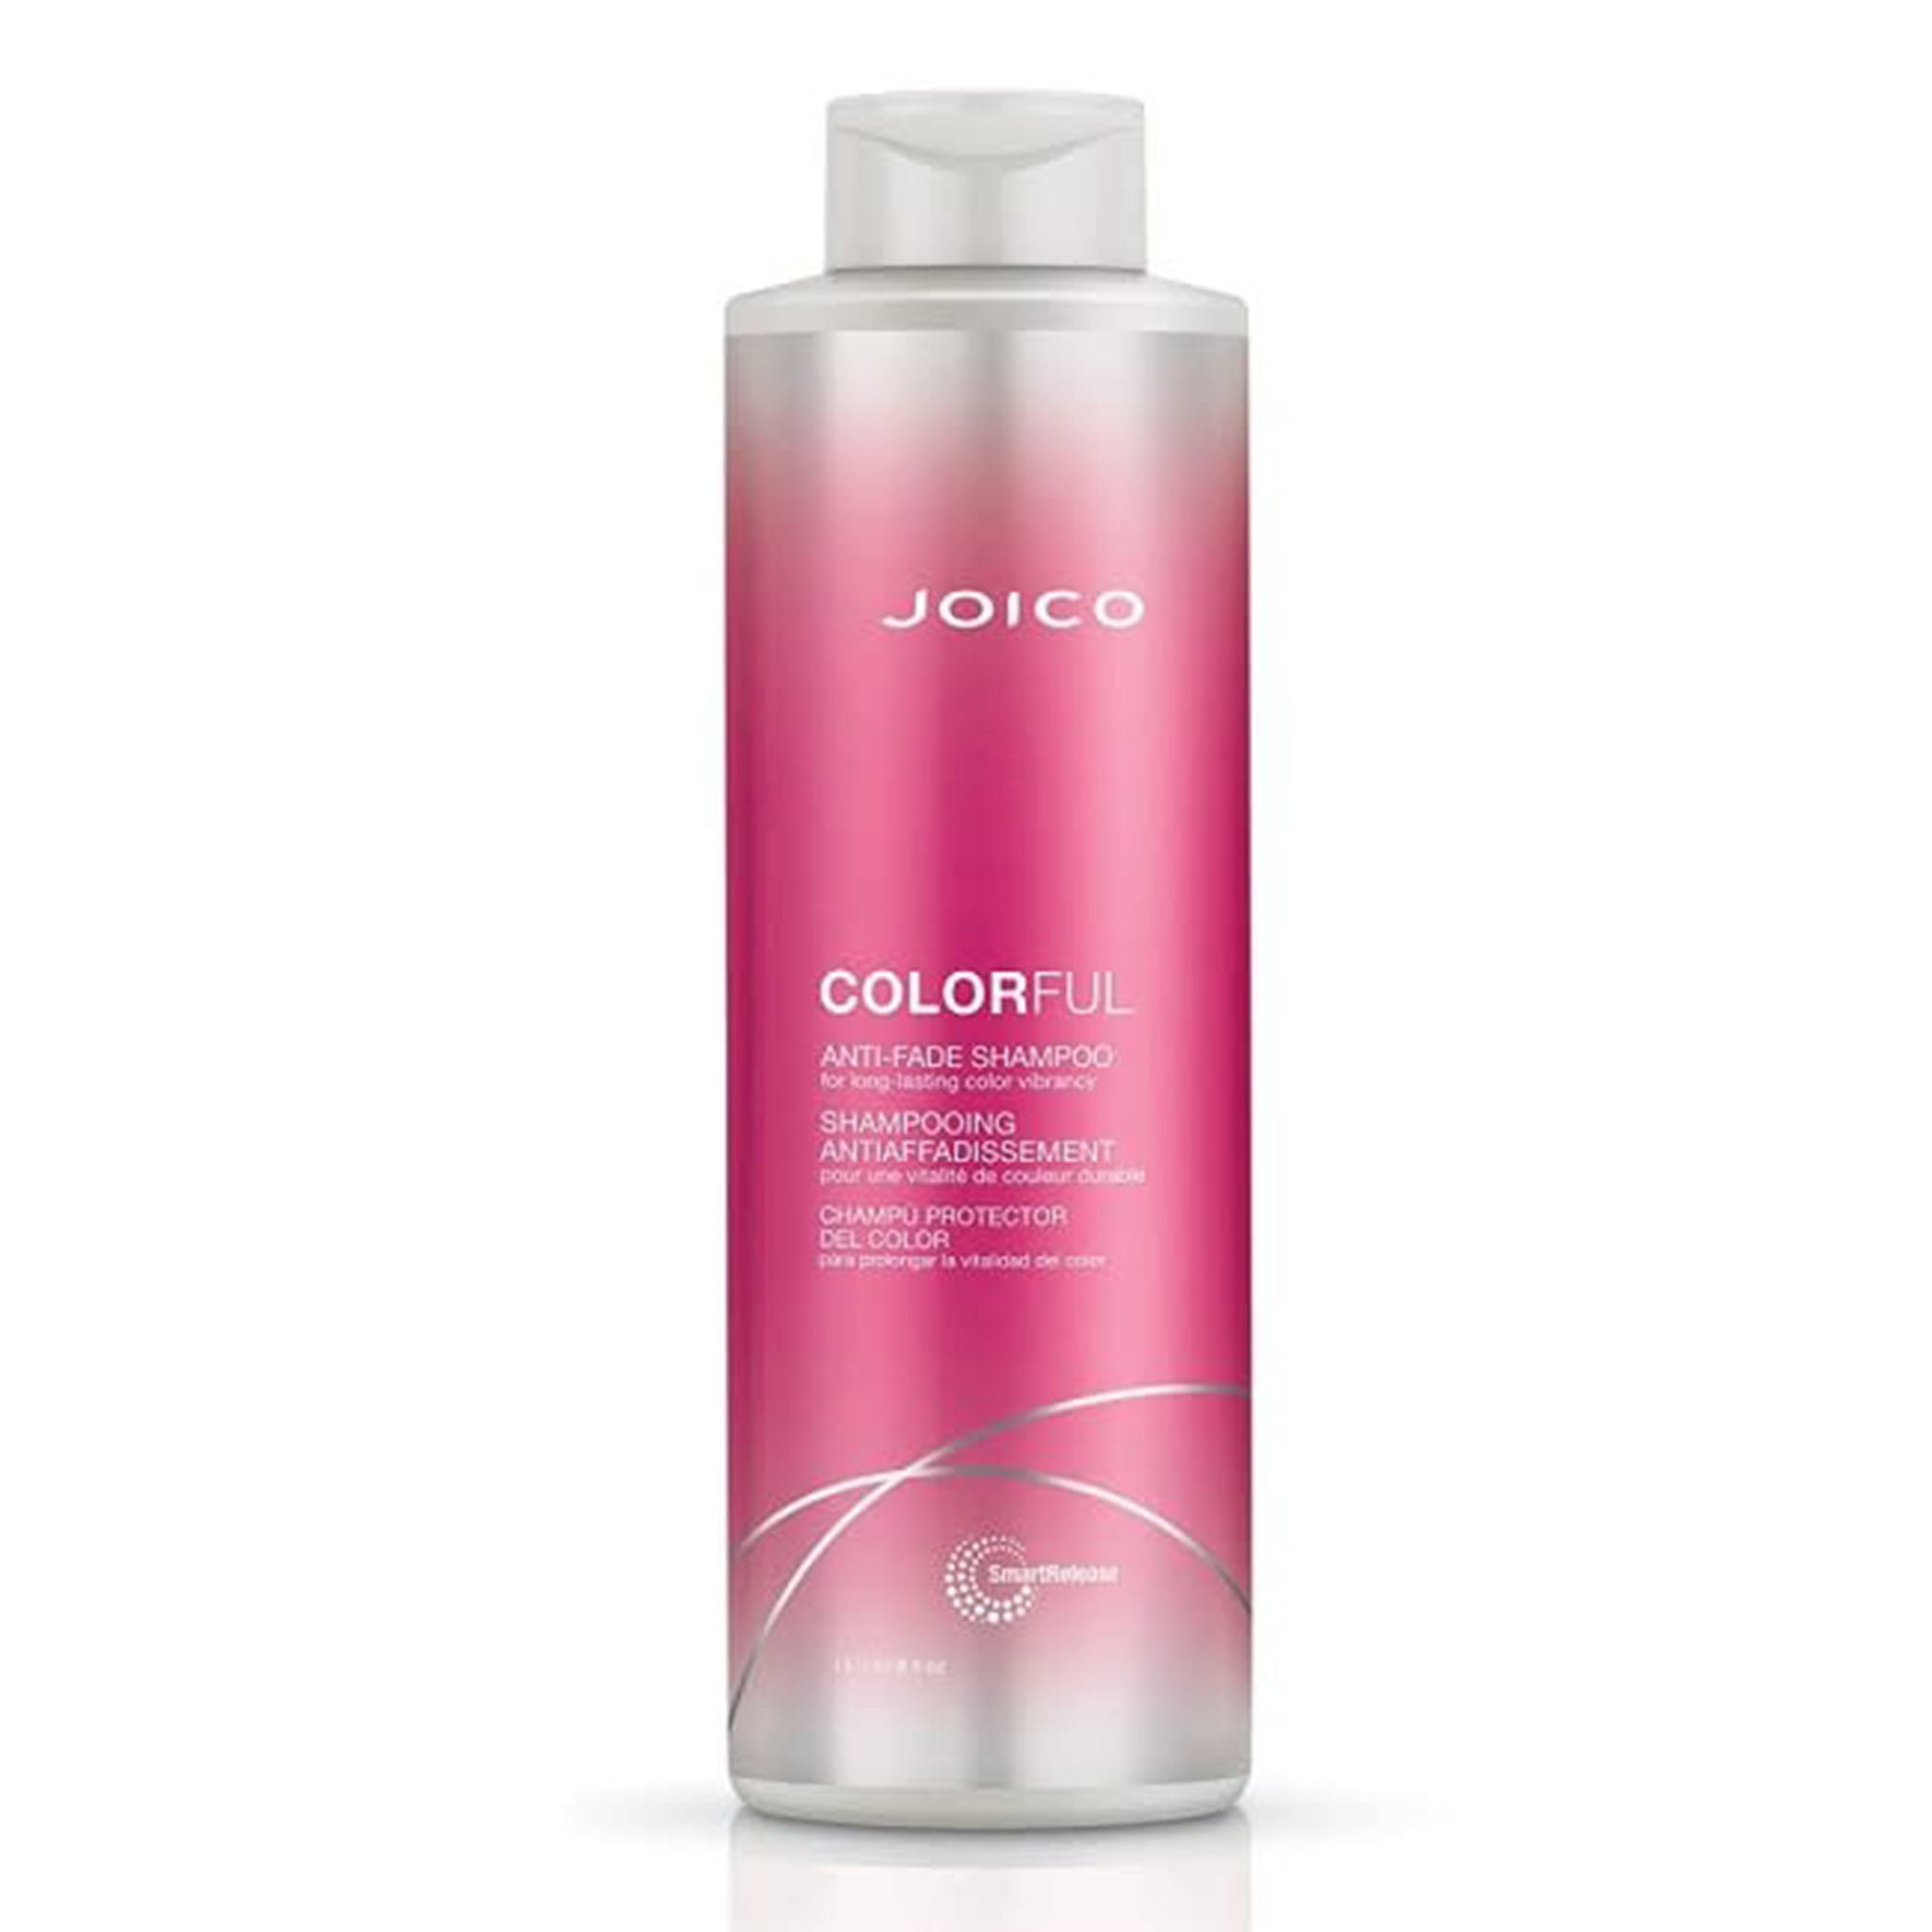 Joico. Shampoing AntiAffadissement Colorful - 1000 ml - Concept C. Shop